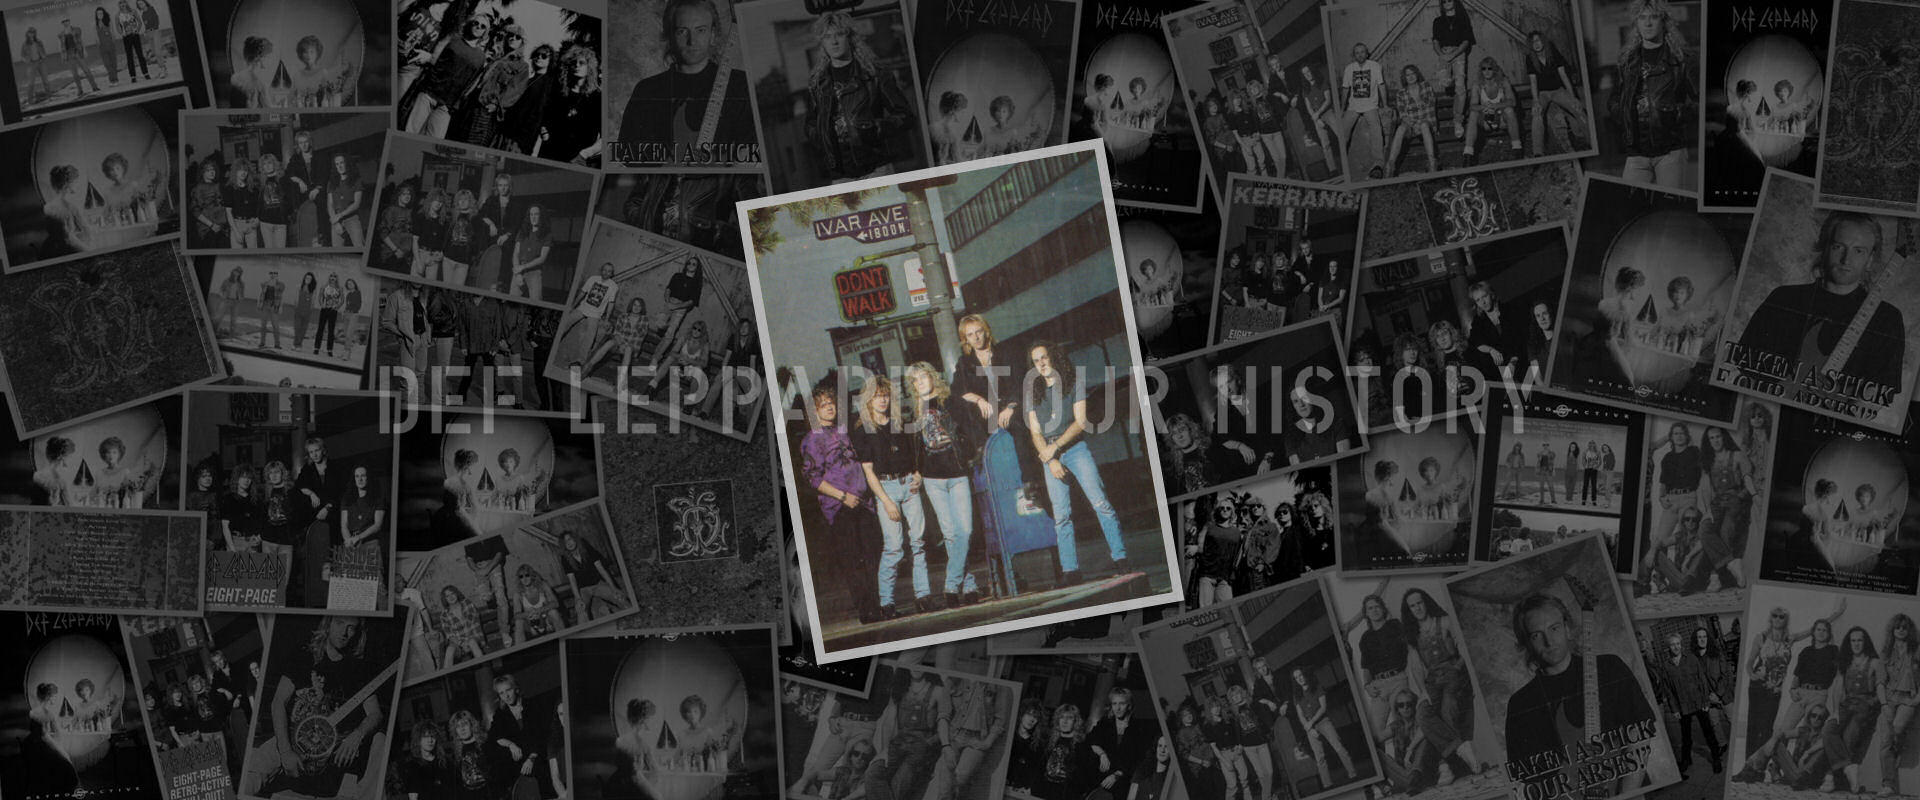 Def Leppard History 4th October 1993 (Retro-Active Album Release)